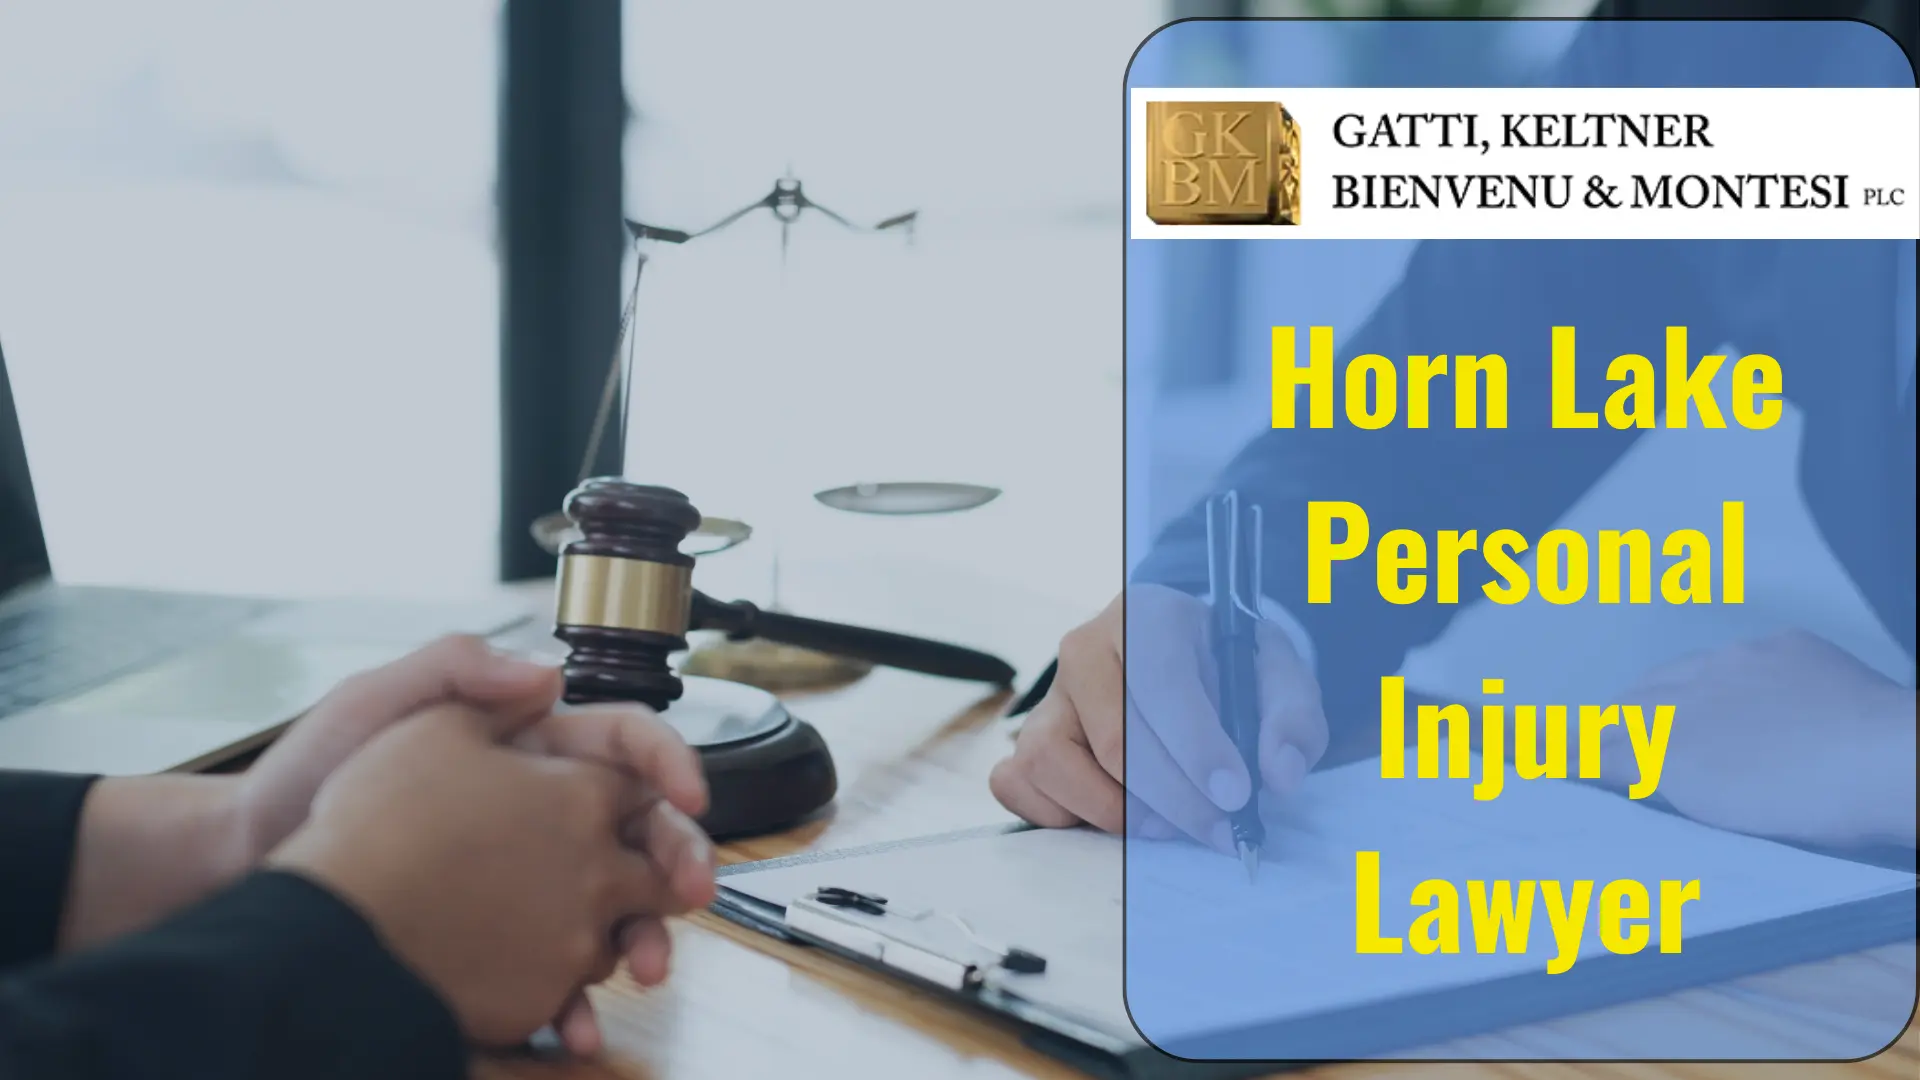 Horn Lake Personal Injury Lawyer